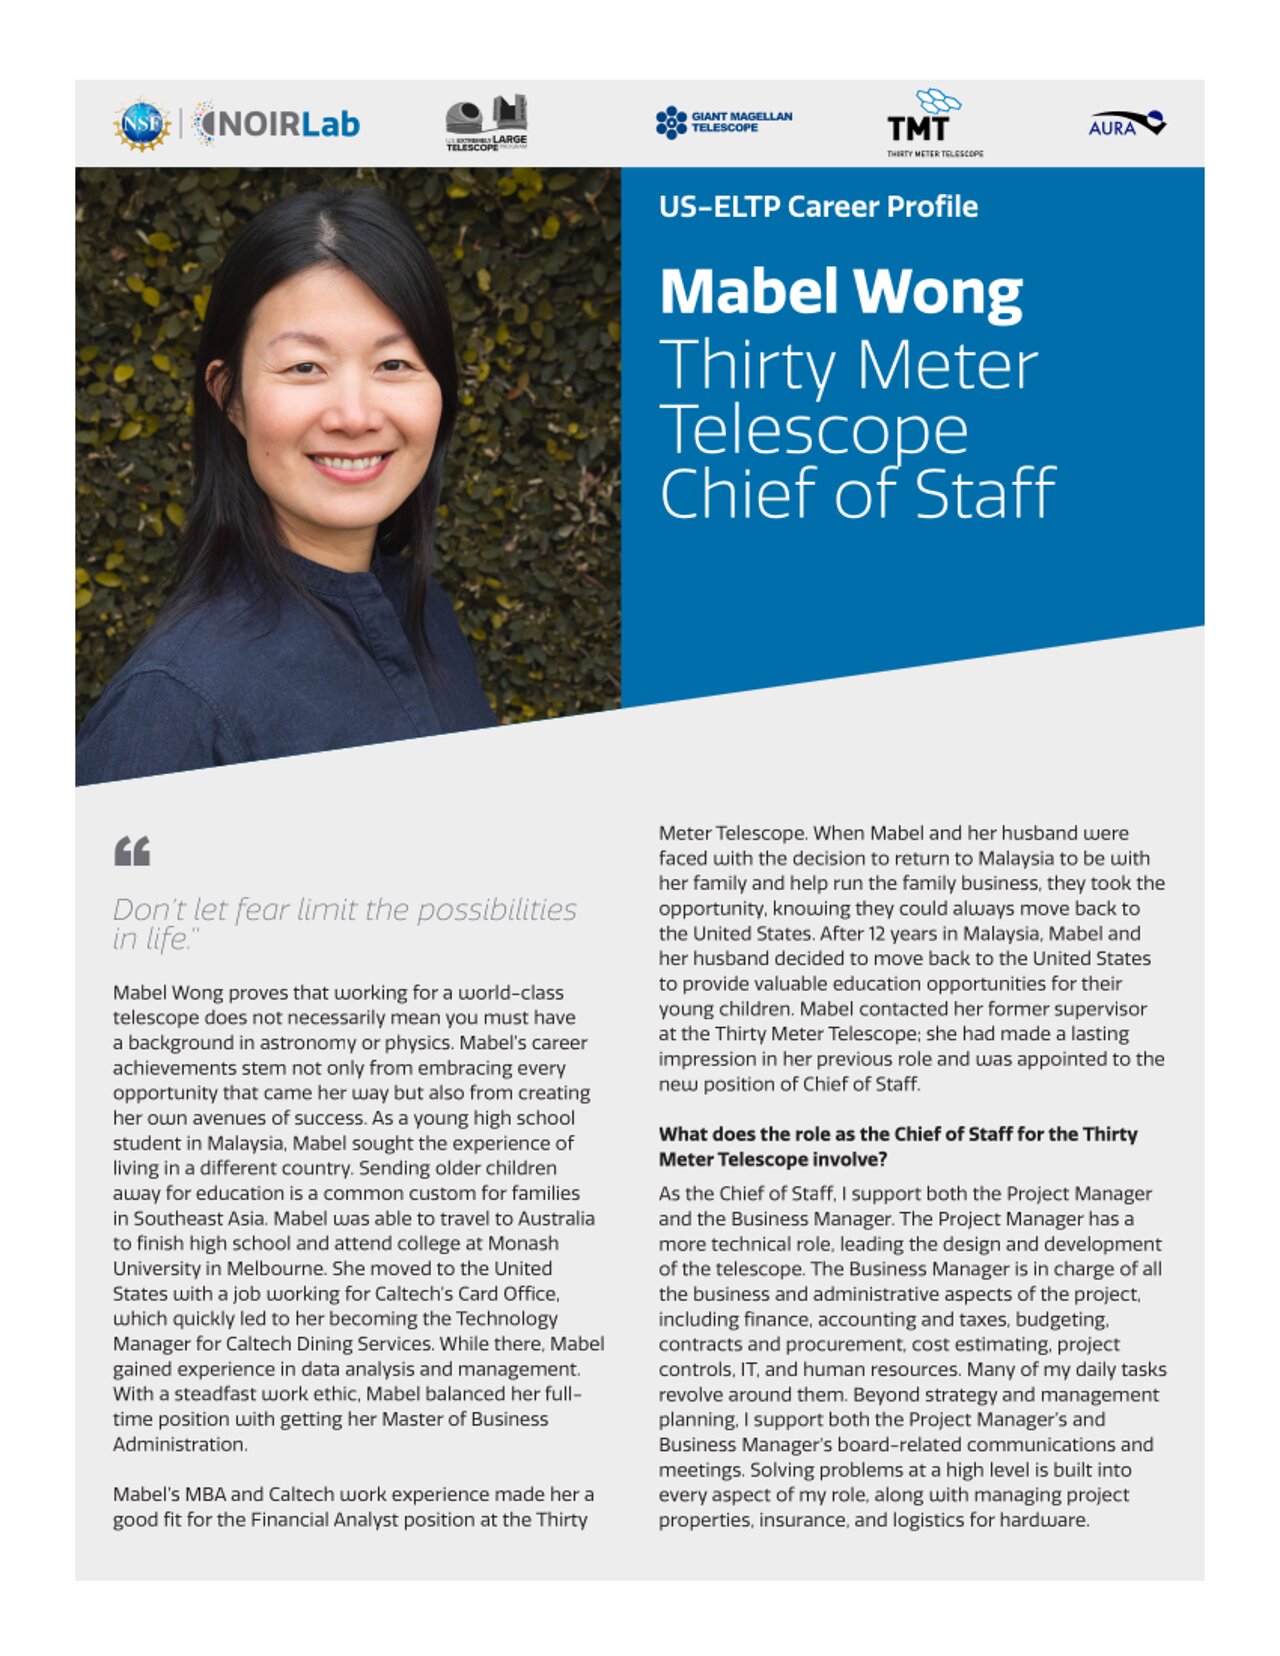 Handouts: US-ELTP Career Profile — Mabel Wong